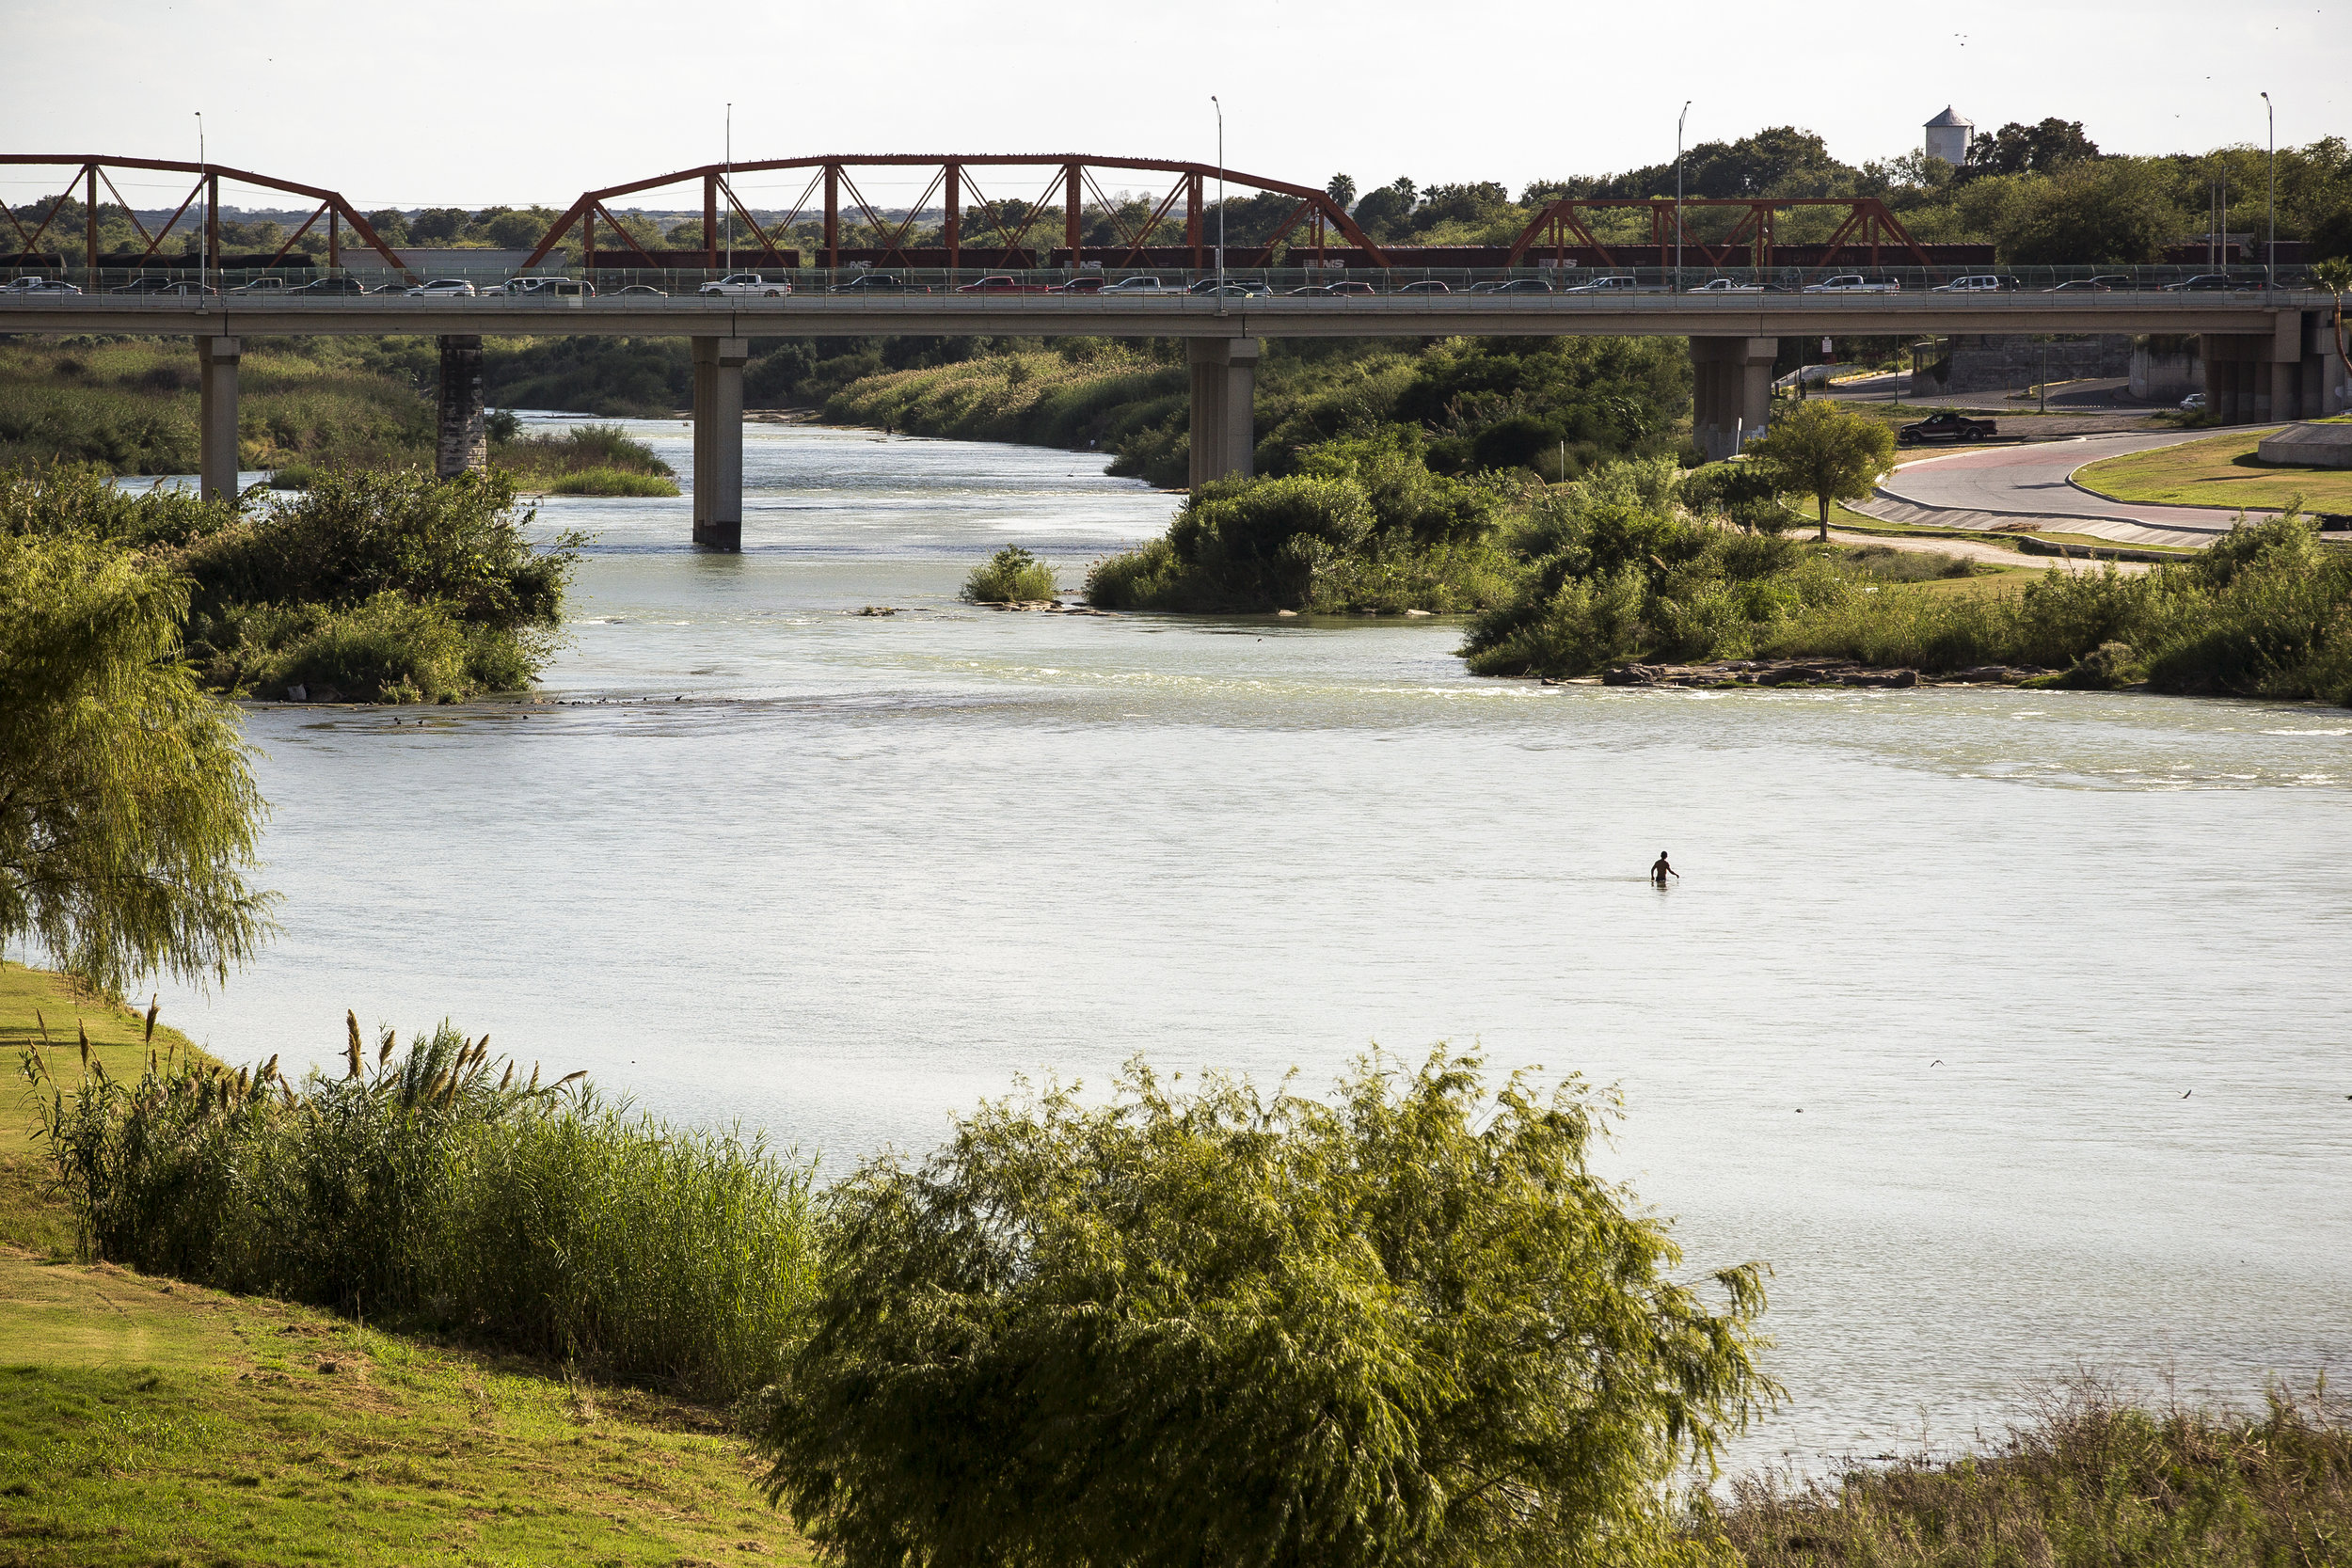  The international bridge and Rio Grande river between Eagle Pass and Piedras Negras. Photo by Martin do Nascimento 